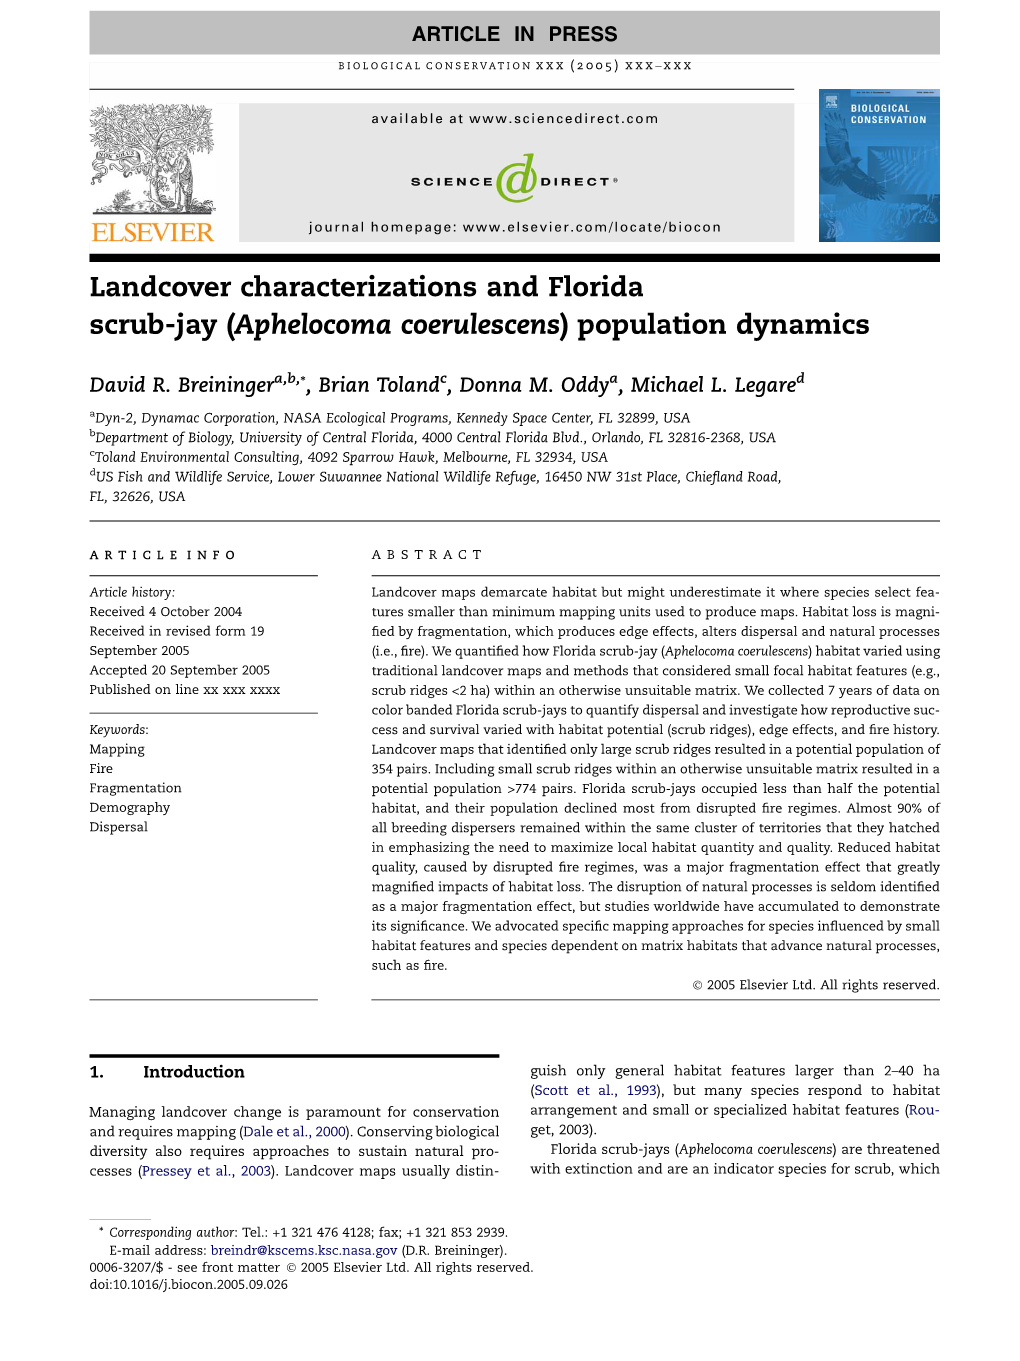 Landcover Characterizations and Florida Scrub-Jay (Aphelocoma Coerulescens) Population Dynamics